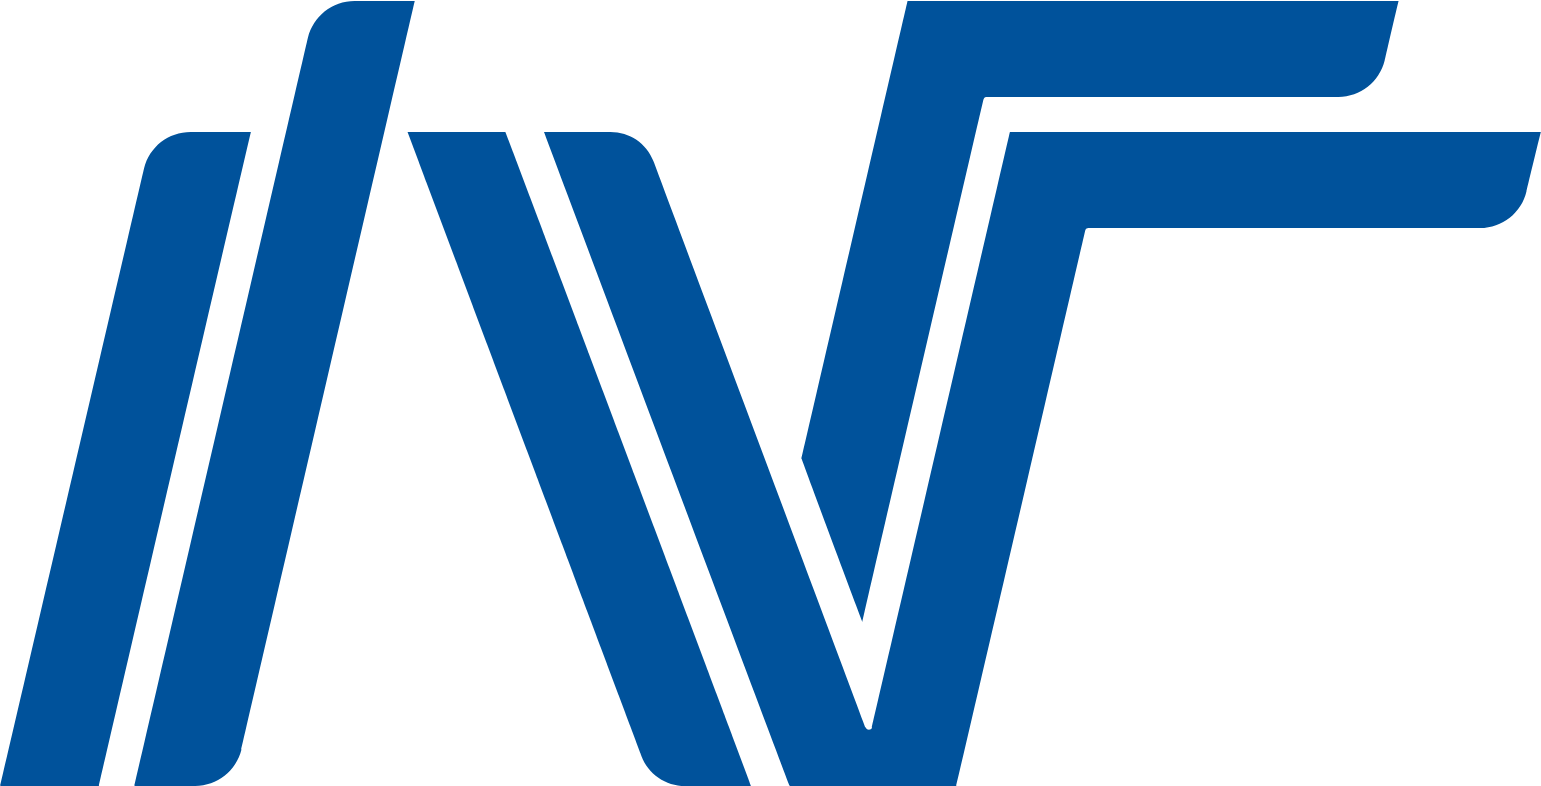 Industrivarden logo (transparent PNG)